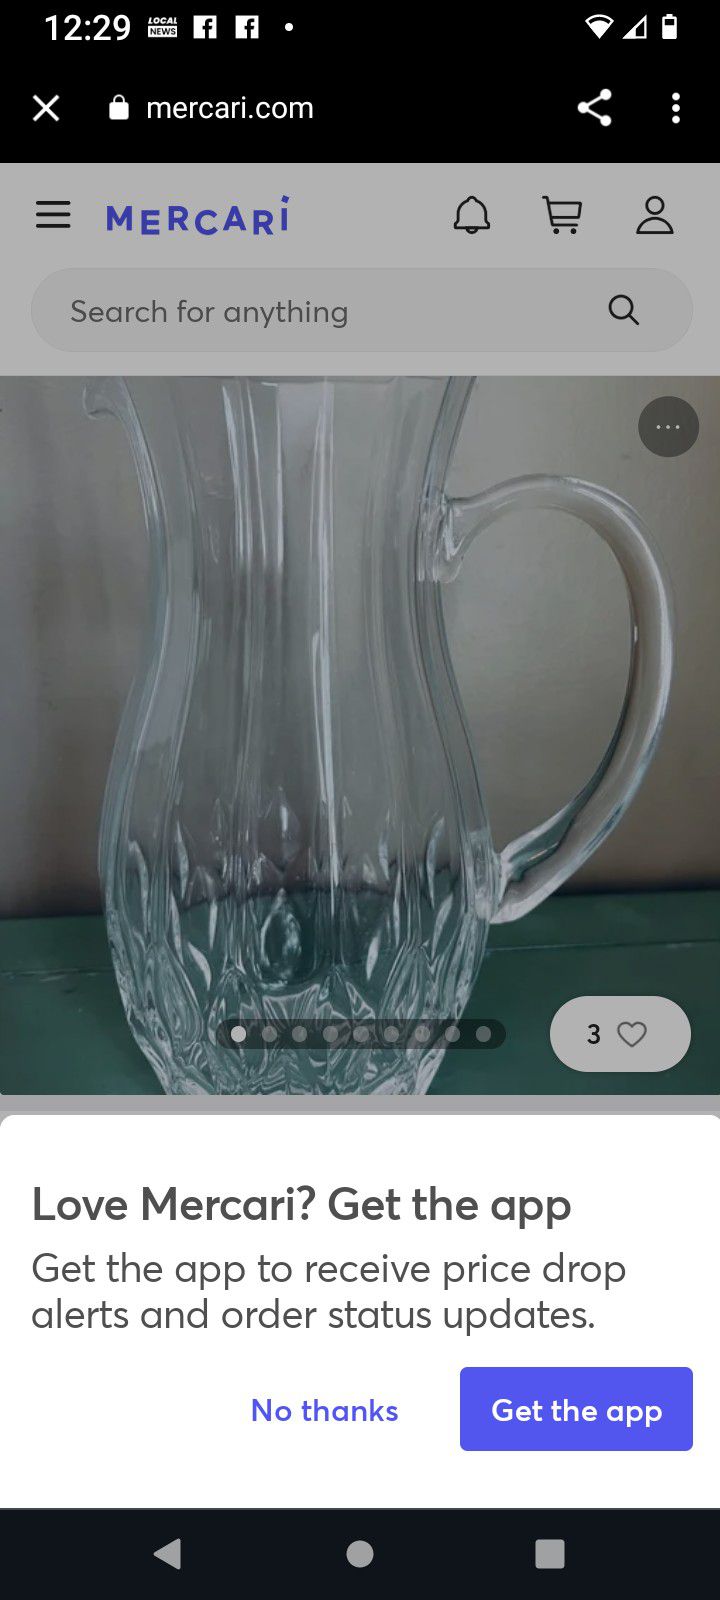 Crystal Vase 